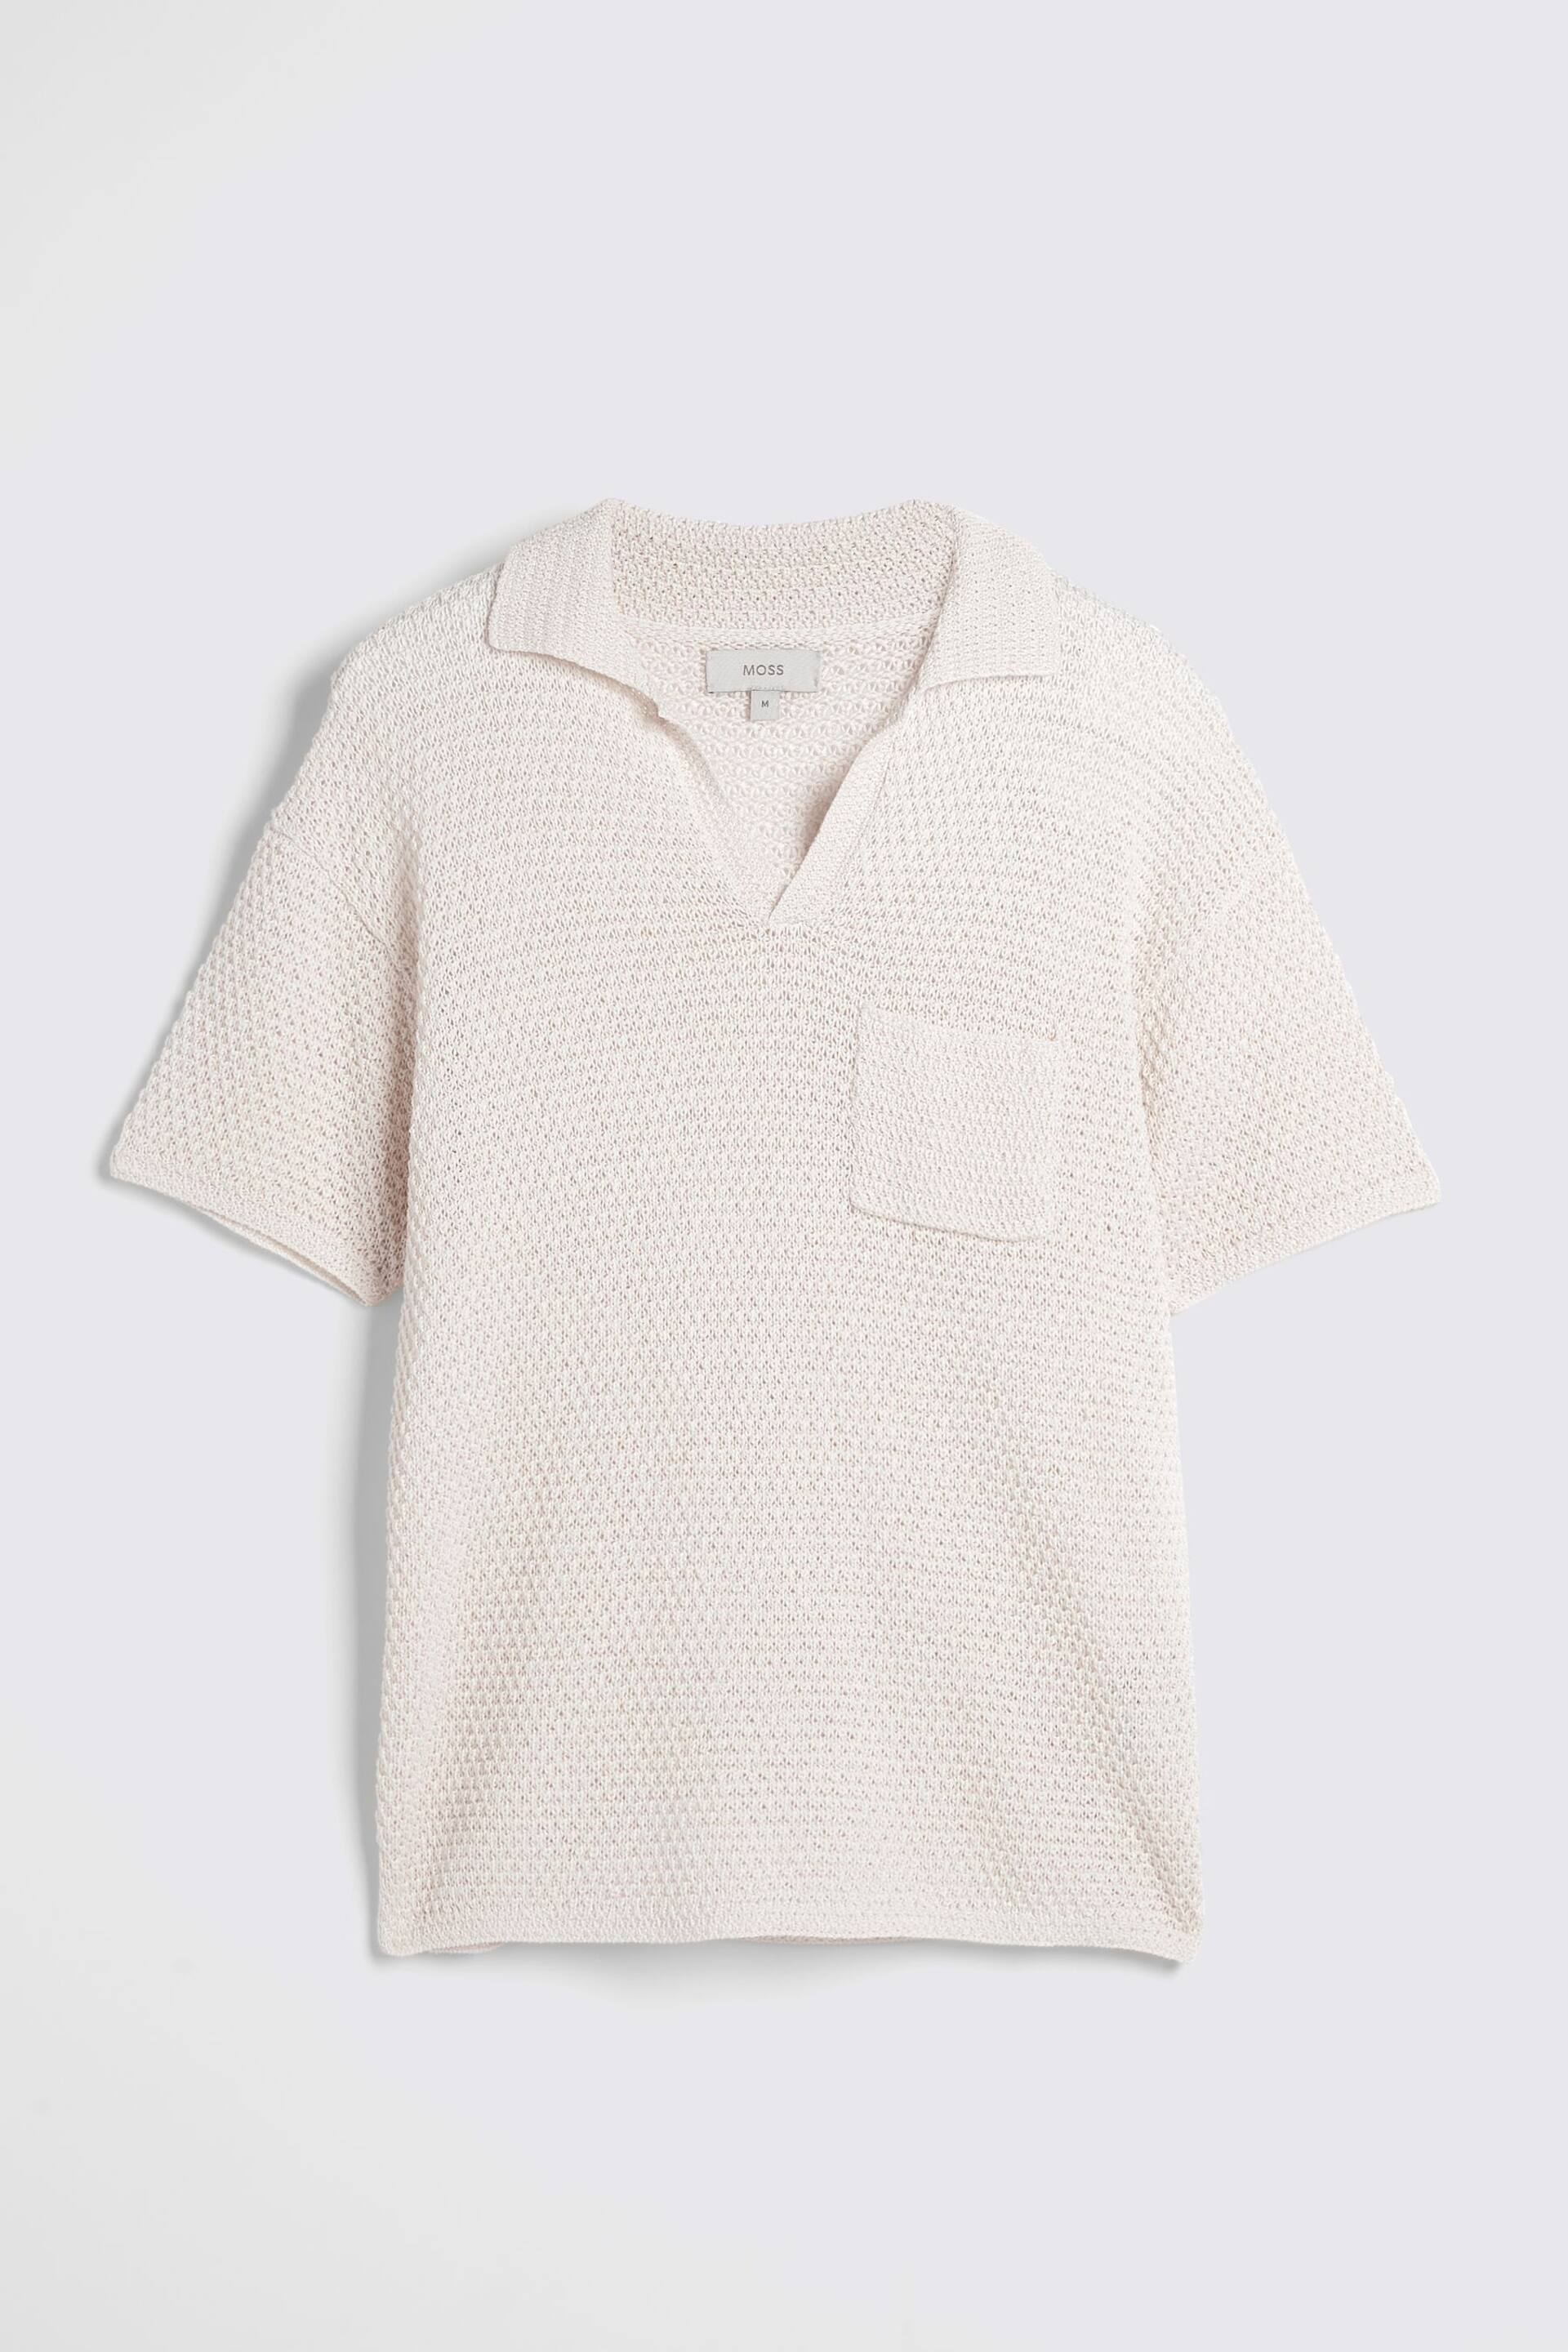 MOSS Ecru Natural Open Knit Skipper Polo Shirt - Image 5 of 5